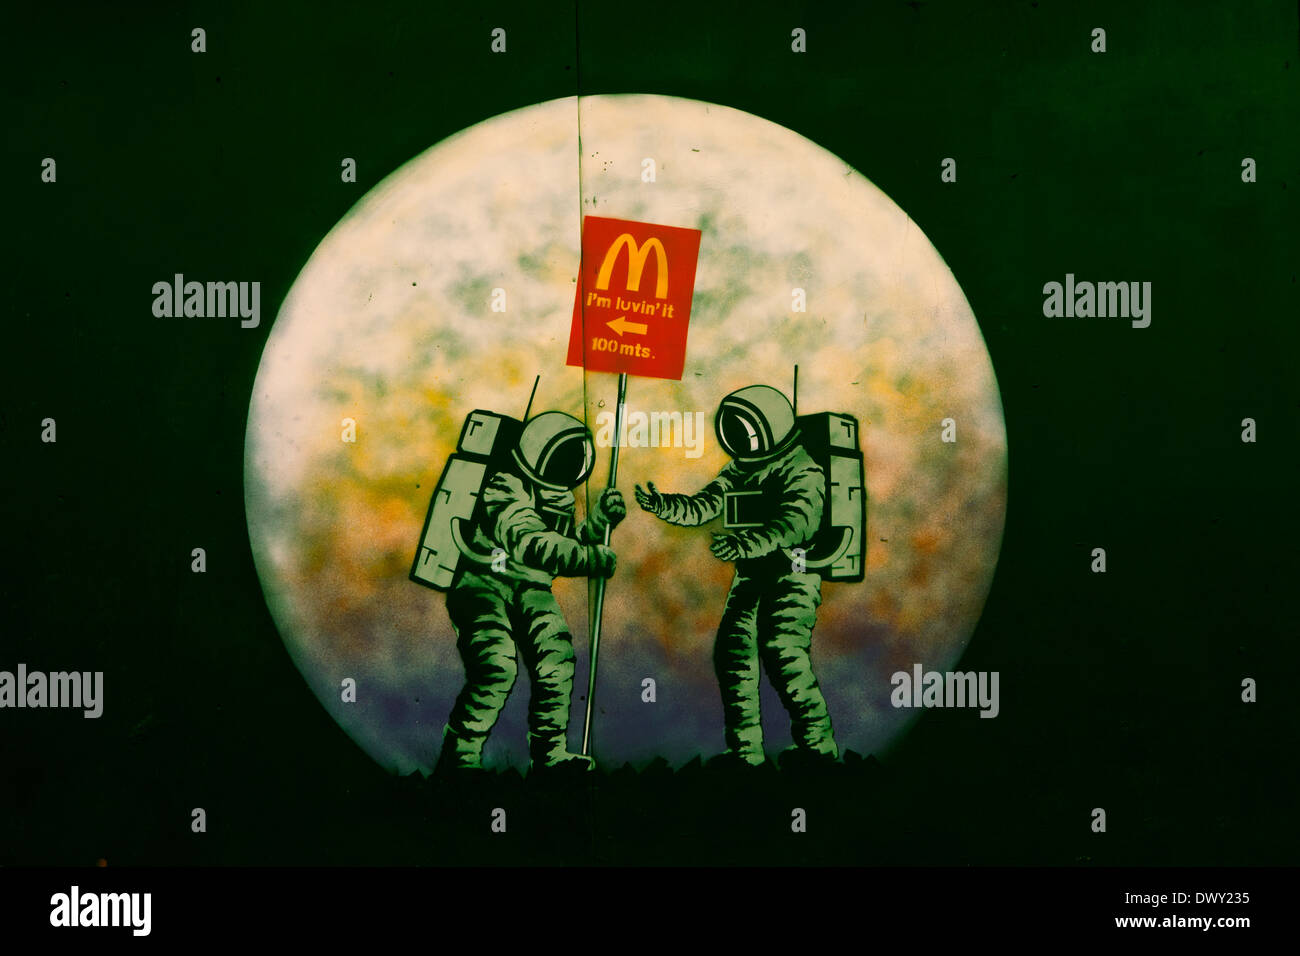 Banksy style graffiti of 2 men on the moon advertising McDonalds Stock Photo